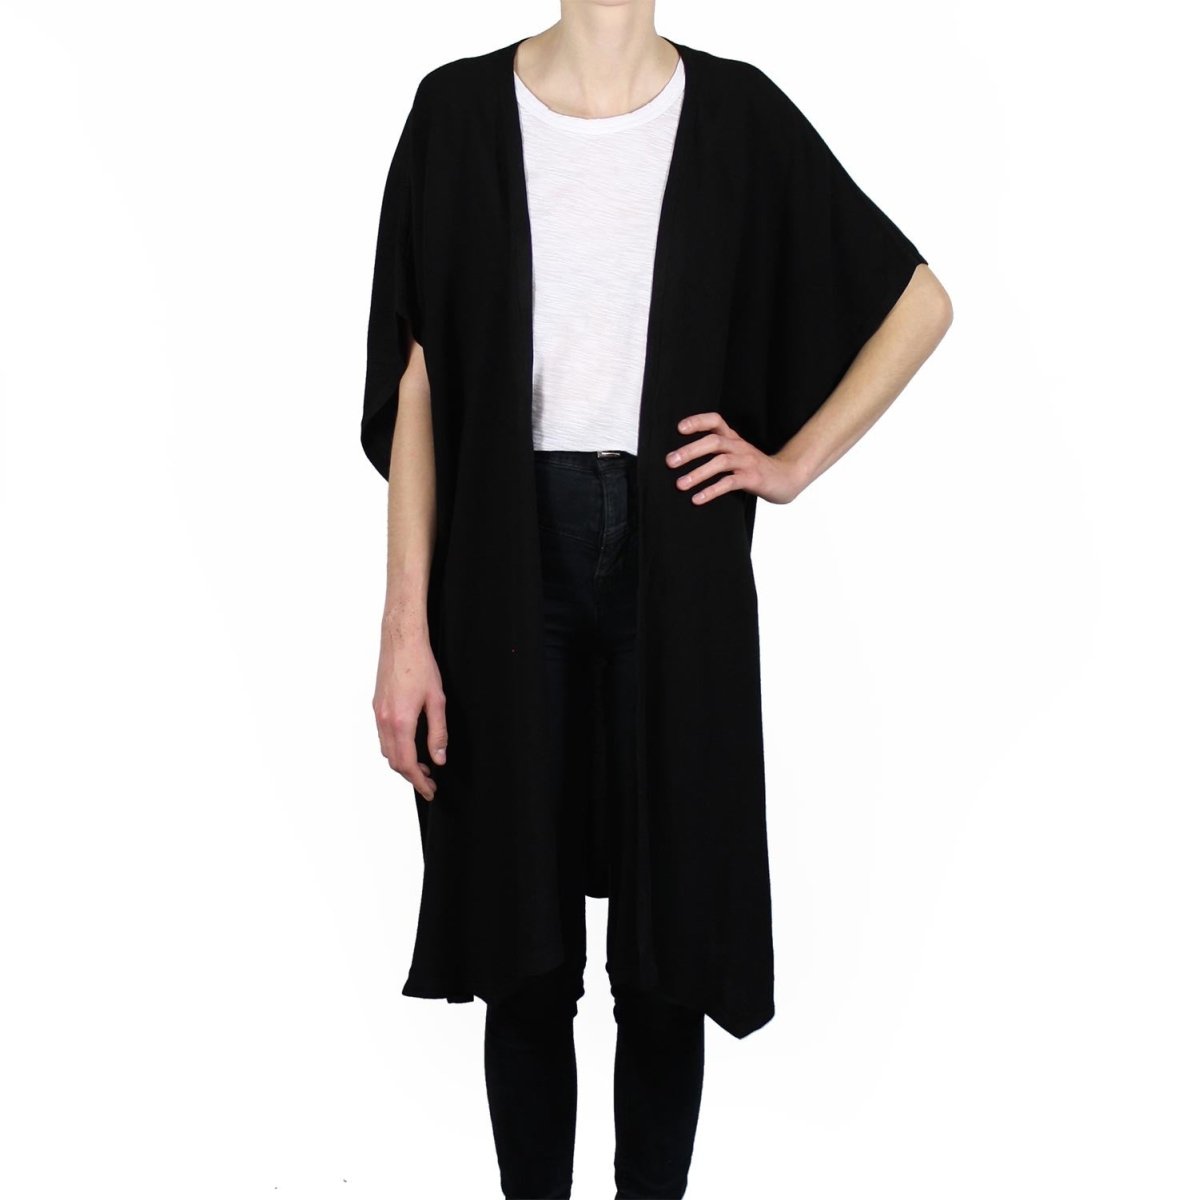 Tienda Ho Clothing Fannon Vest in Black